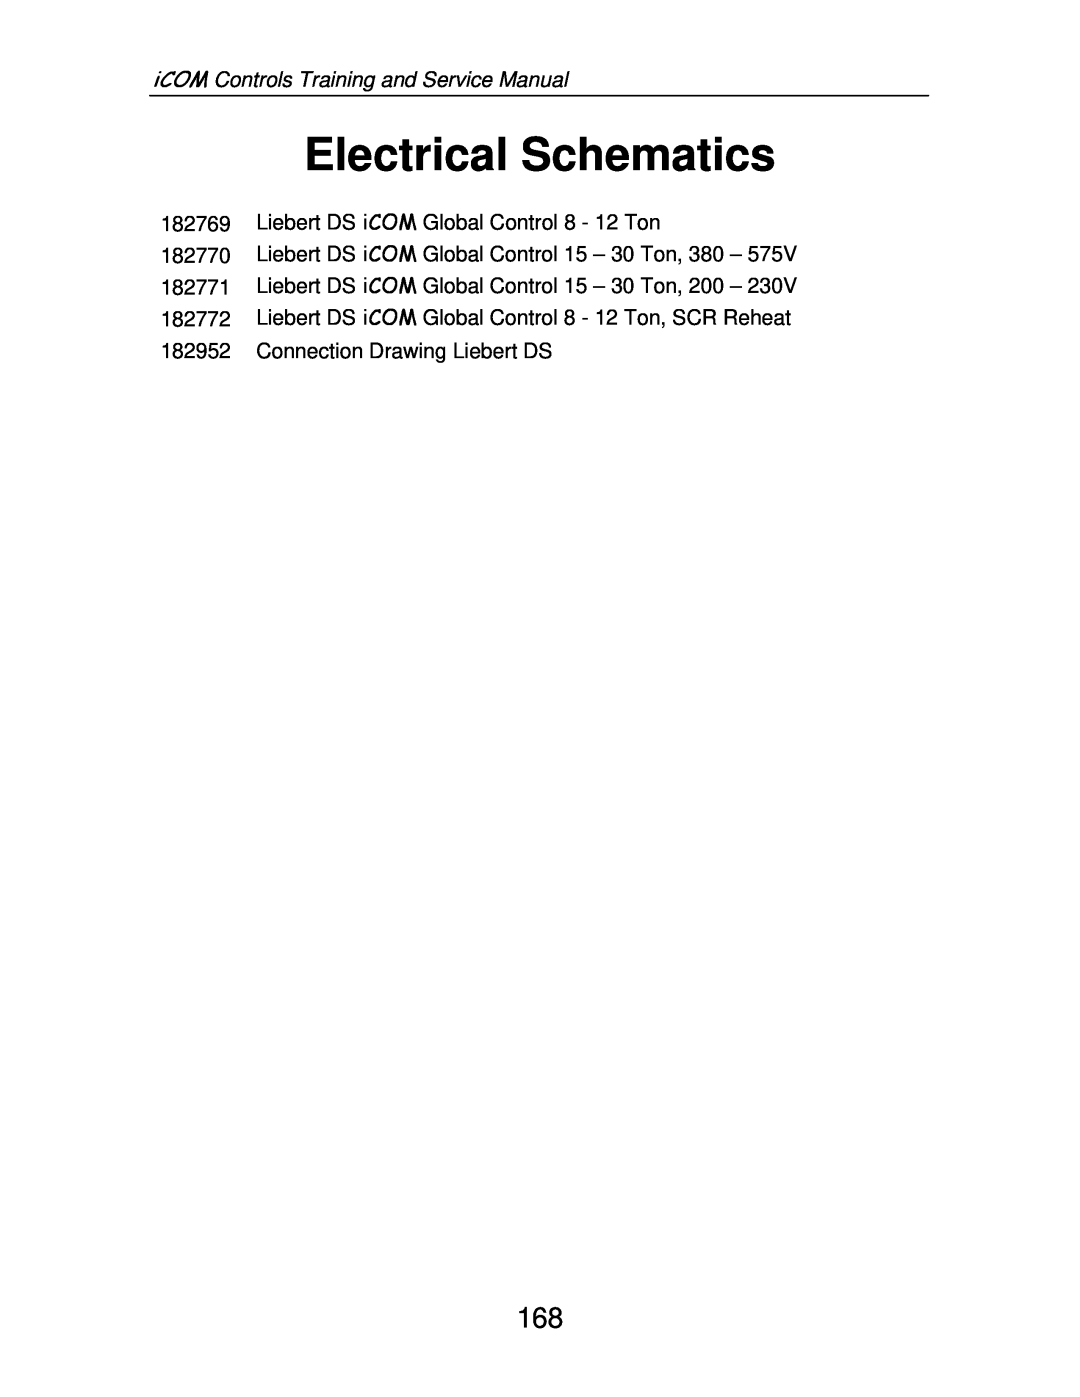 Liebert TM-10098 service manual Electrical Schematics, iCOM Controls Training and Service Manual 